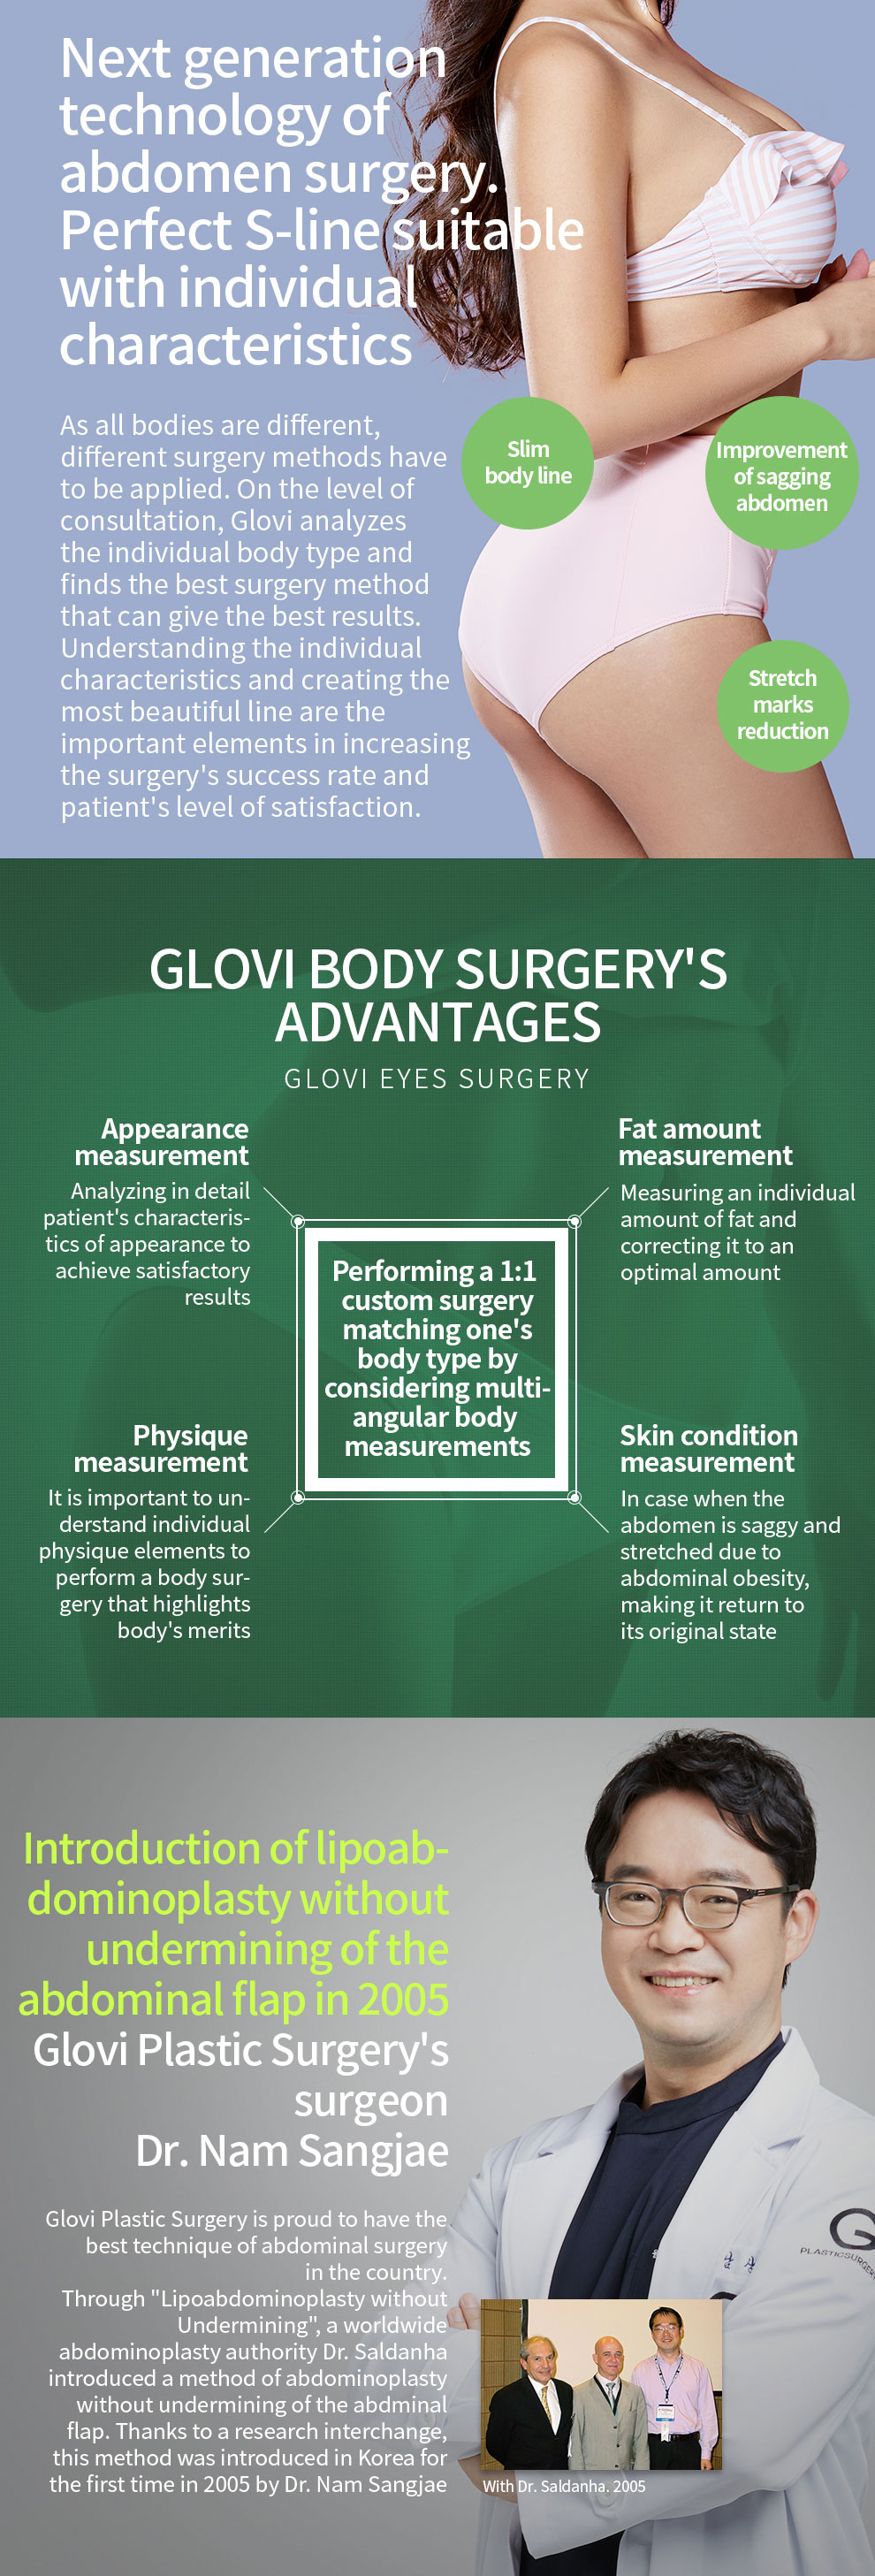 Glovi body surgery img